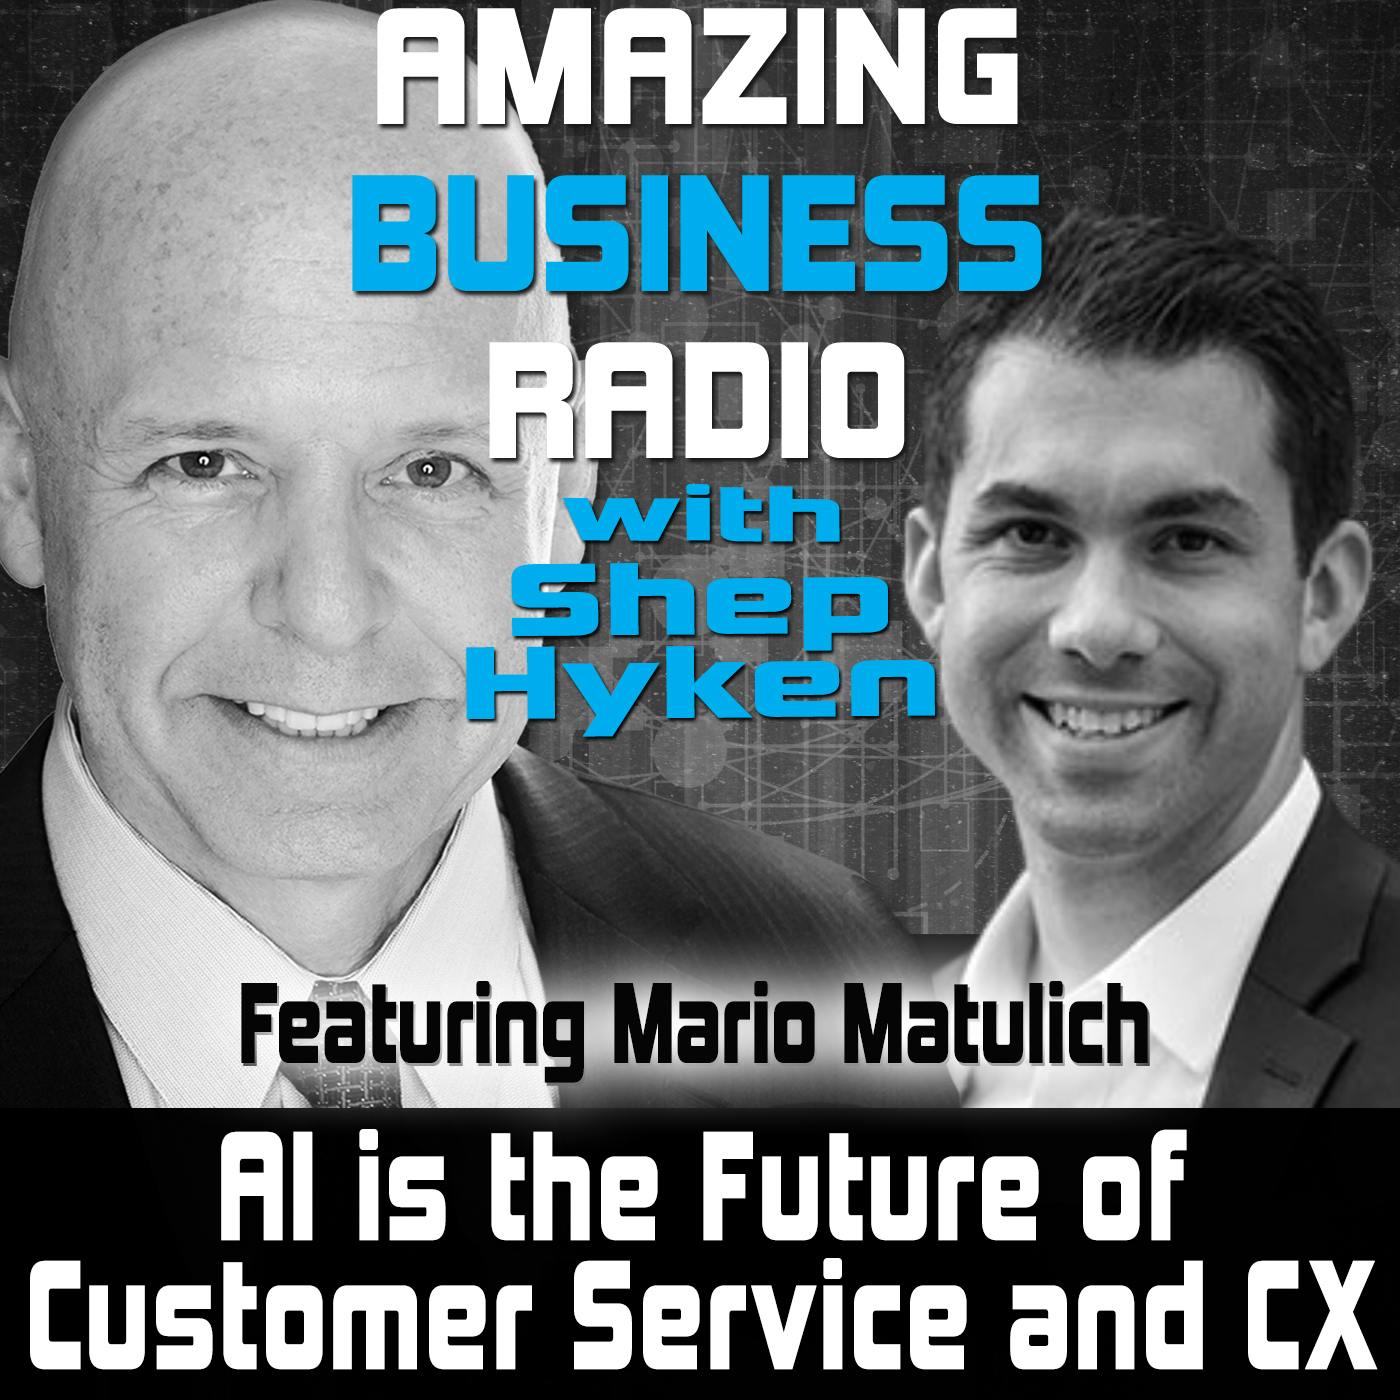 AI is the Future of Customer Service and CX Featuring Mario Matulich